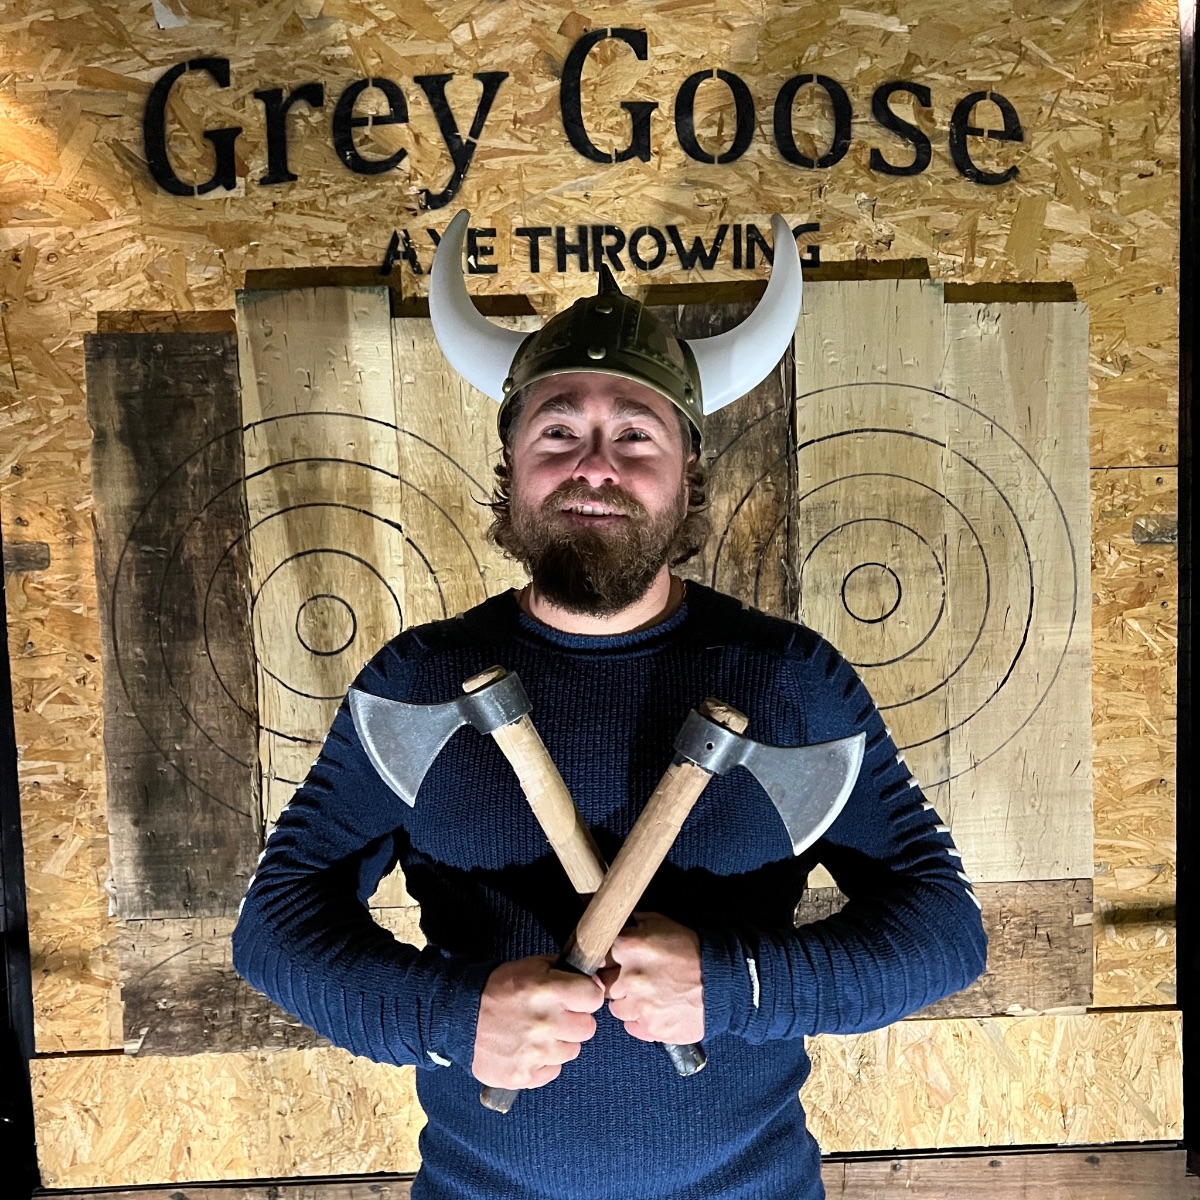 Grey Goose Axe Throwing-Image-19